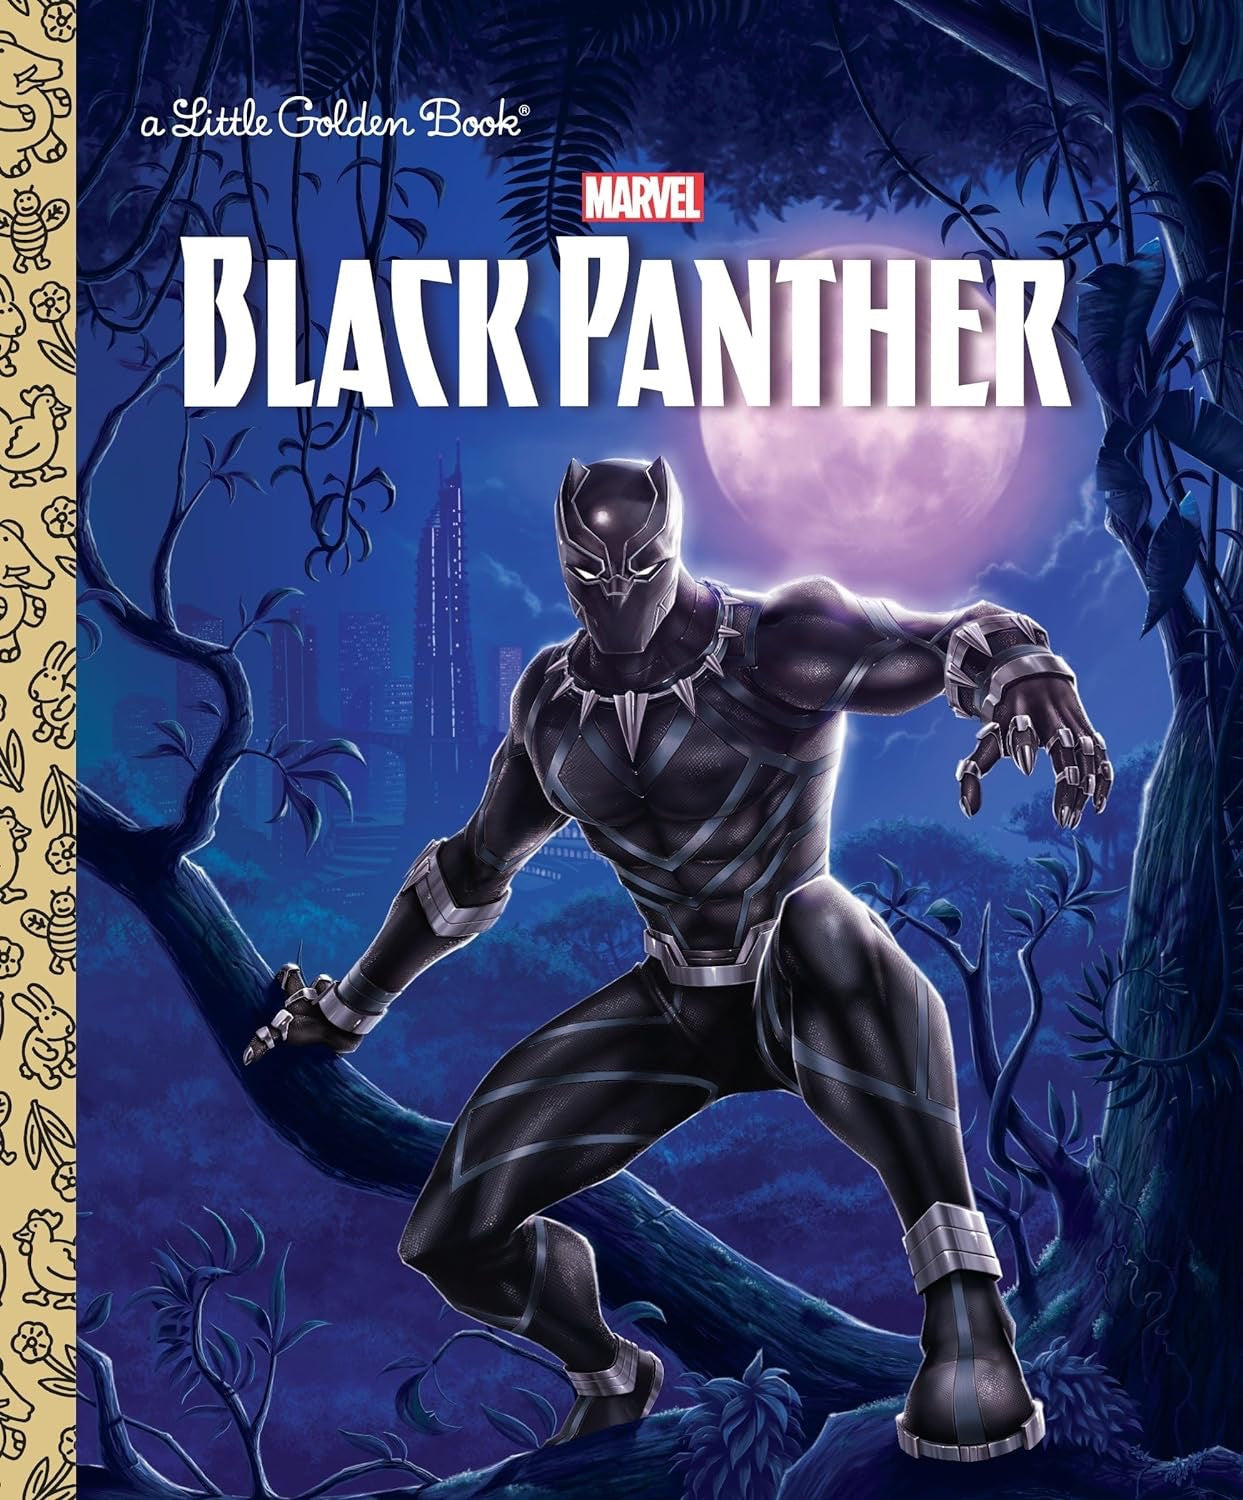 "Black Panther" Little Golden Book